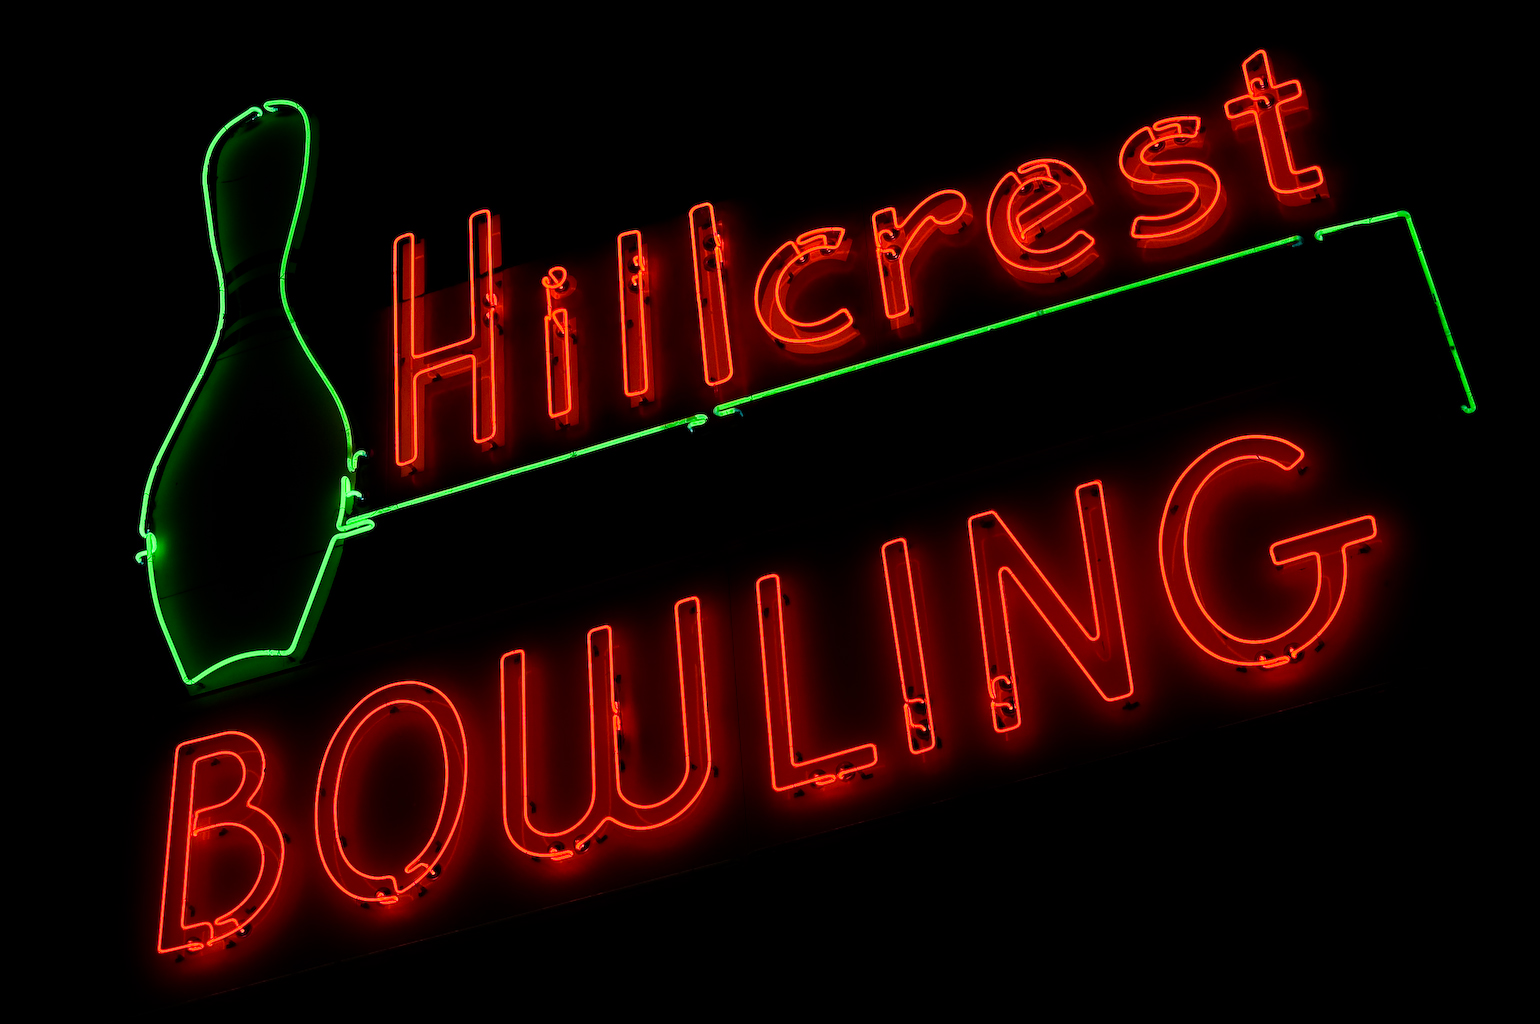 Hillcrest Bowling - 3440 West Broad Street, Columbus, Ohio U.S.A. - June 9, 2007